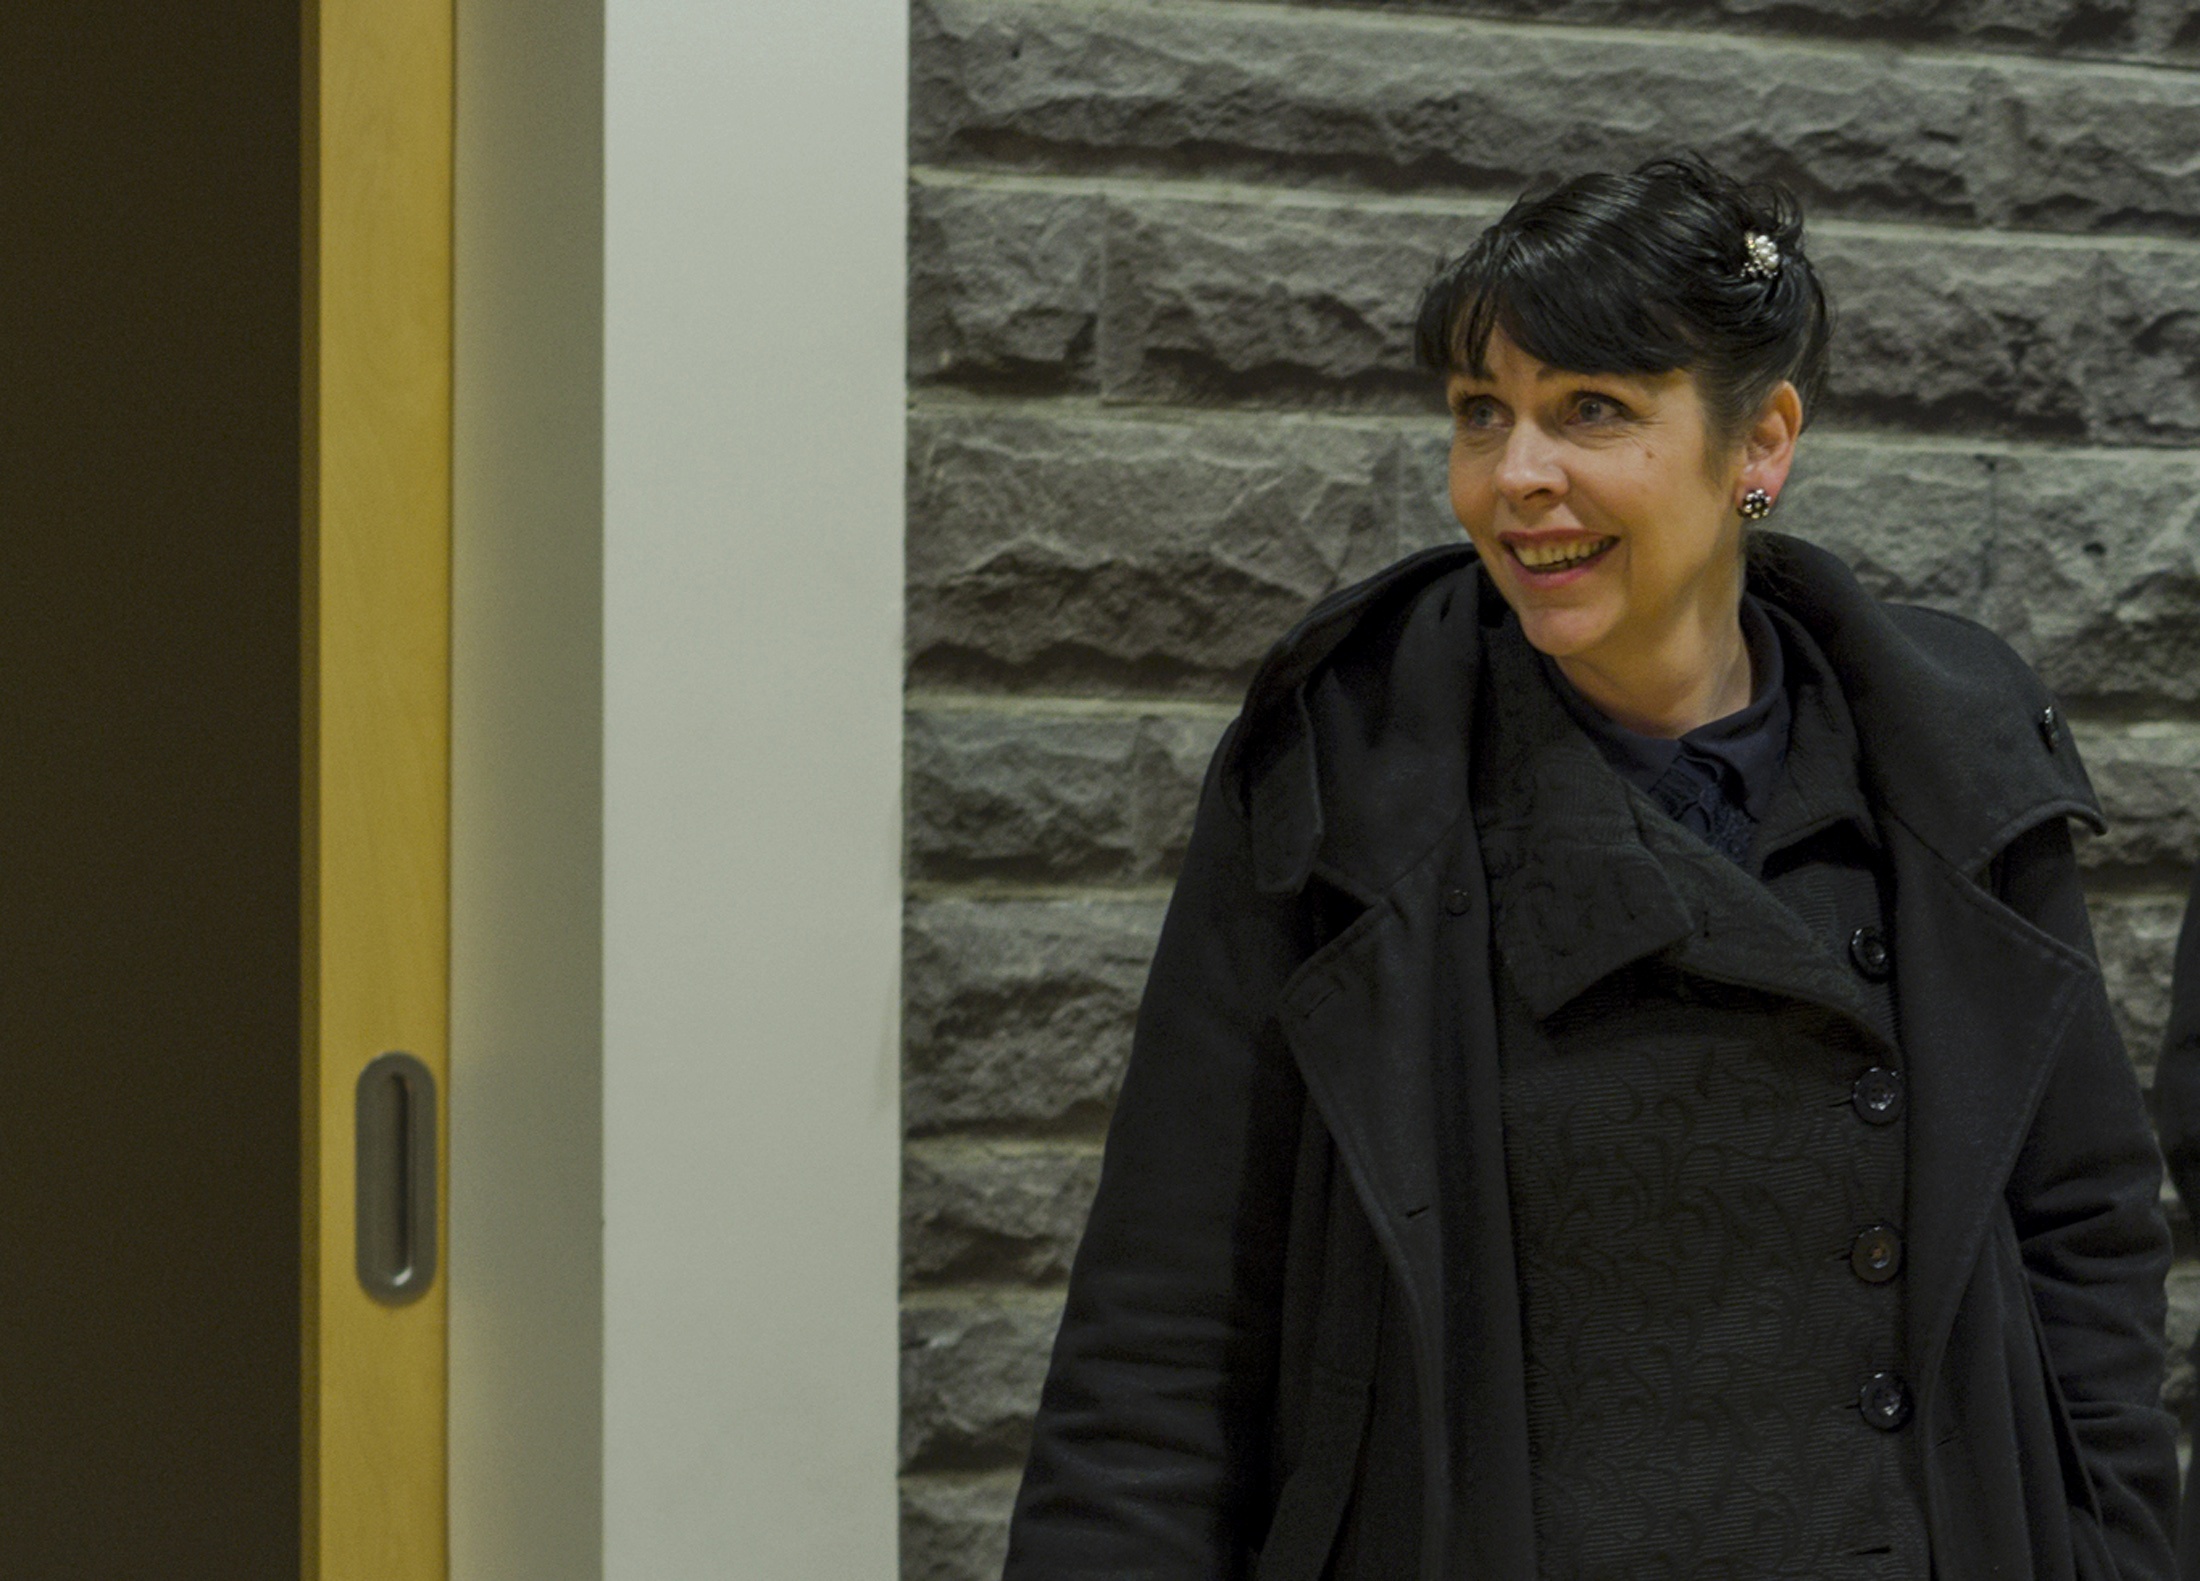 Co-founder of the Icelandic Pirate Party Birgitta Jonsdottir smiles in the Iceland's Parliament in Reykjavik, Iceland, Dec. 6, 2017. (Reuters/Geirix)